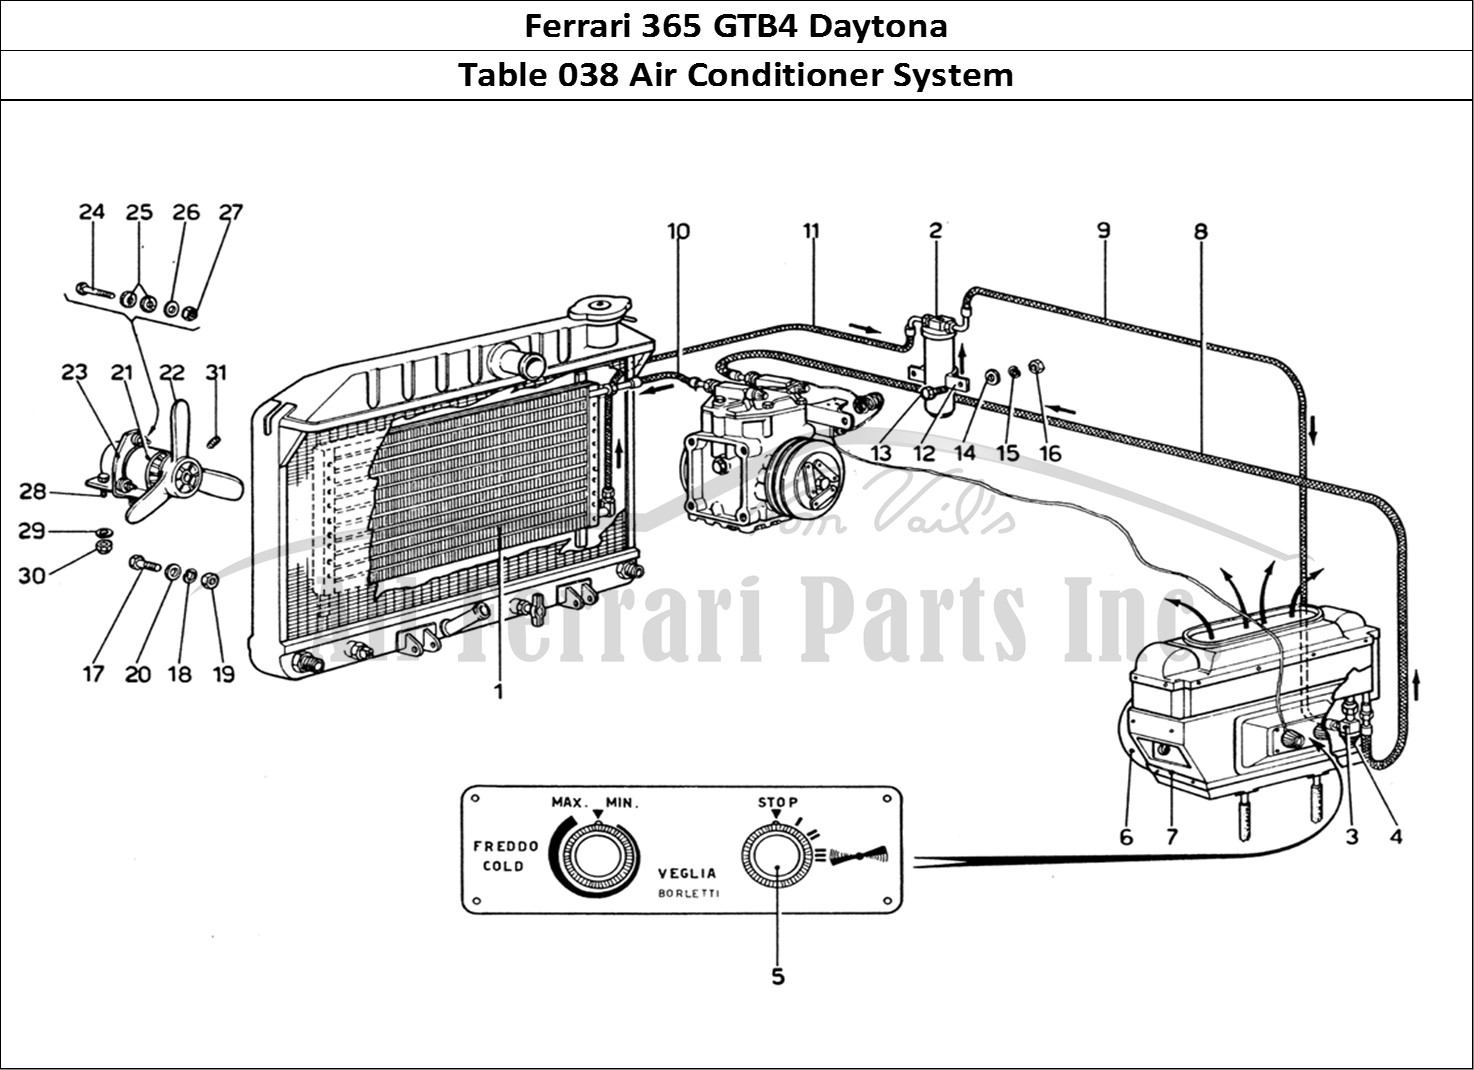 Ferrari Parts Ferrari 365 GTB4 Daytona (1969) Page 038 Air Conditioning System